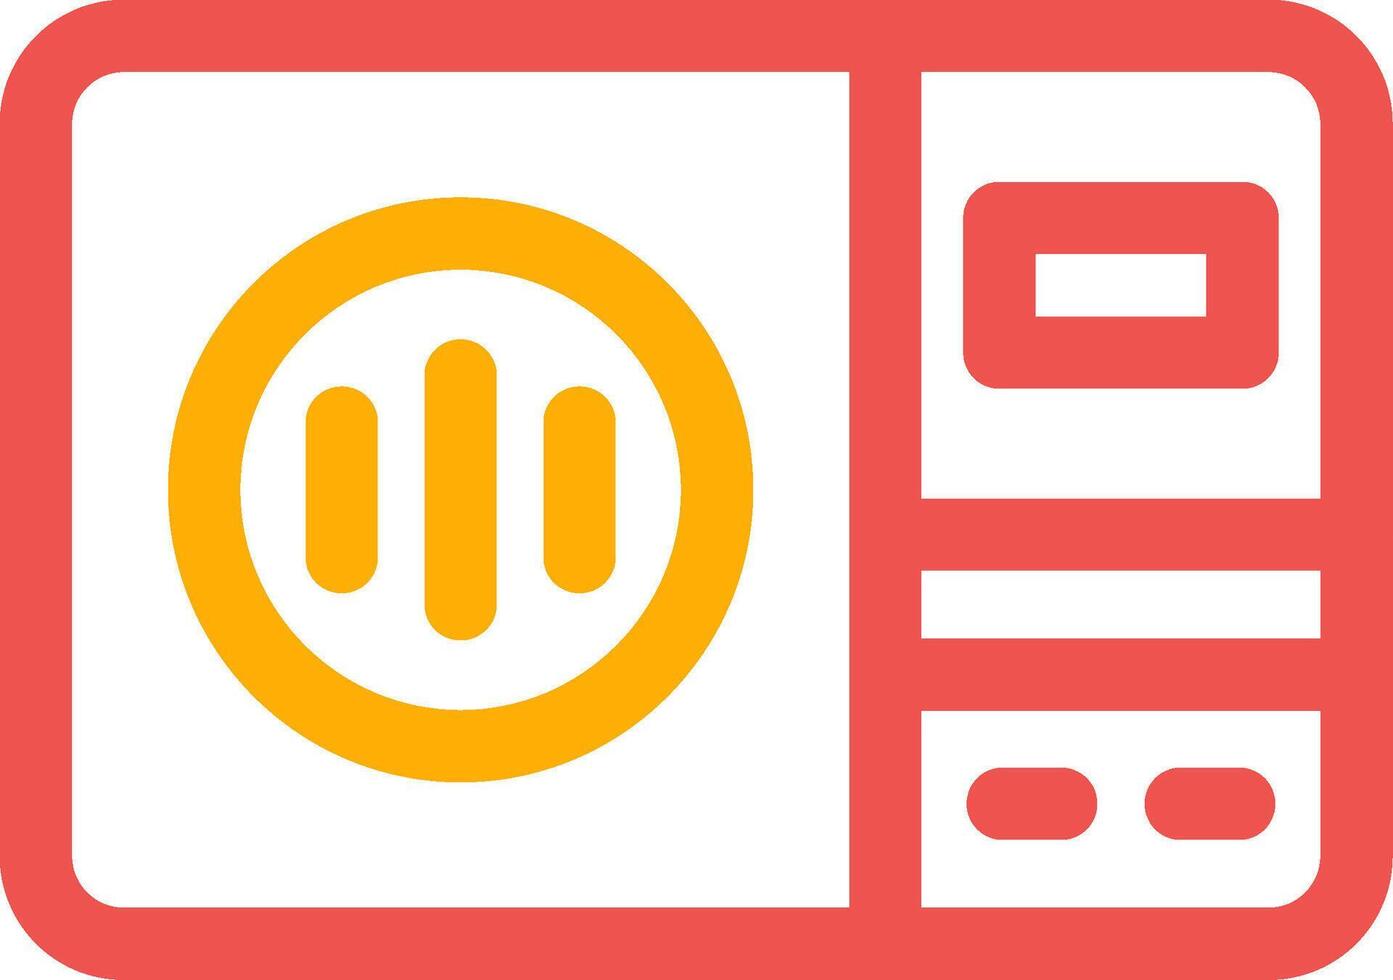 Radio Creative Icon Design vector